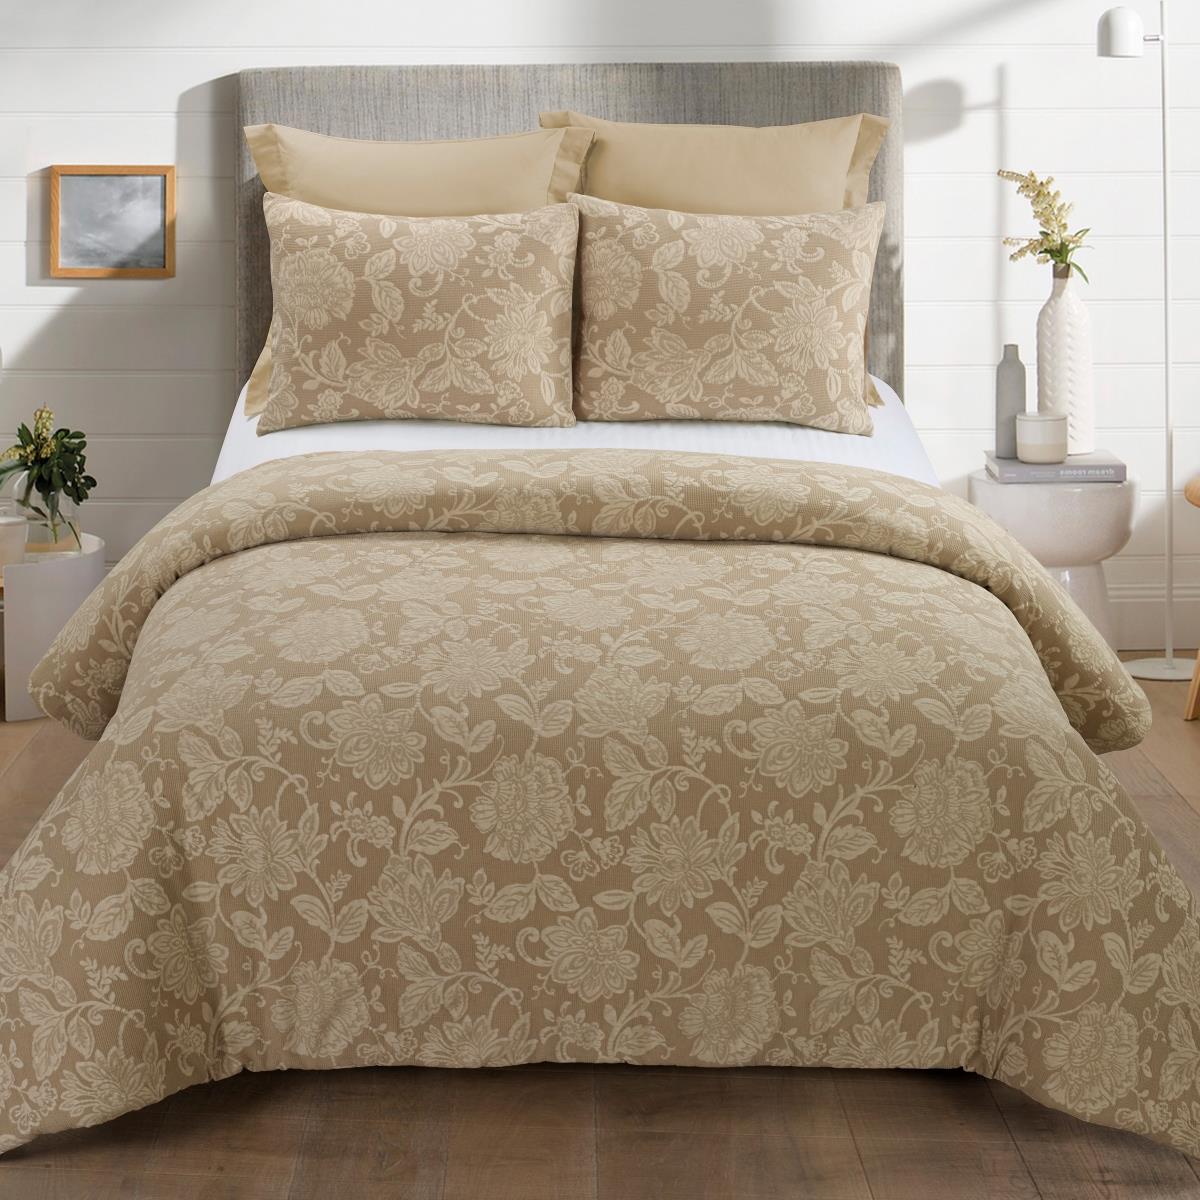 Y00403 King Size Comforter Set - Amadora Cappuccino